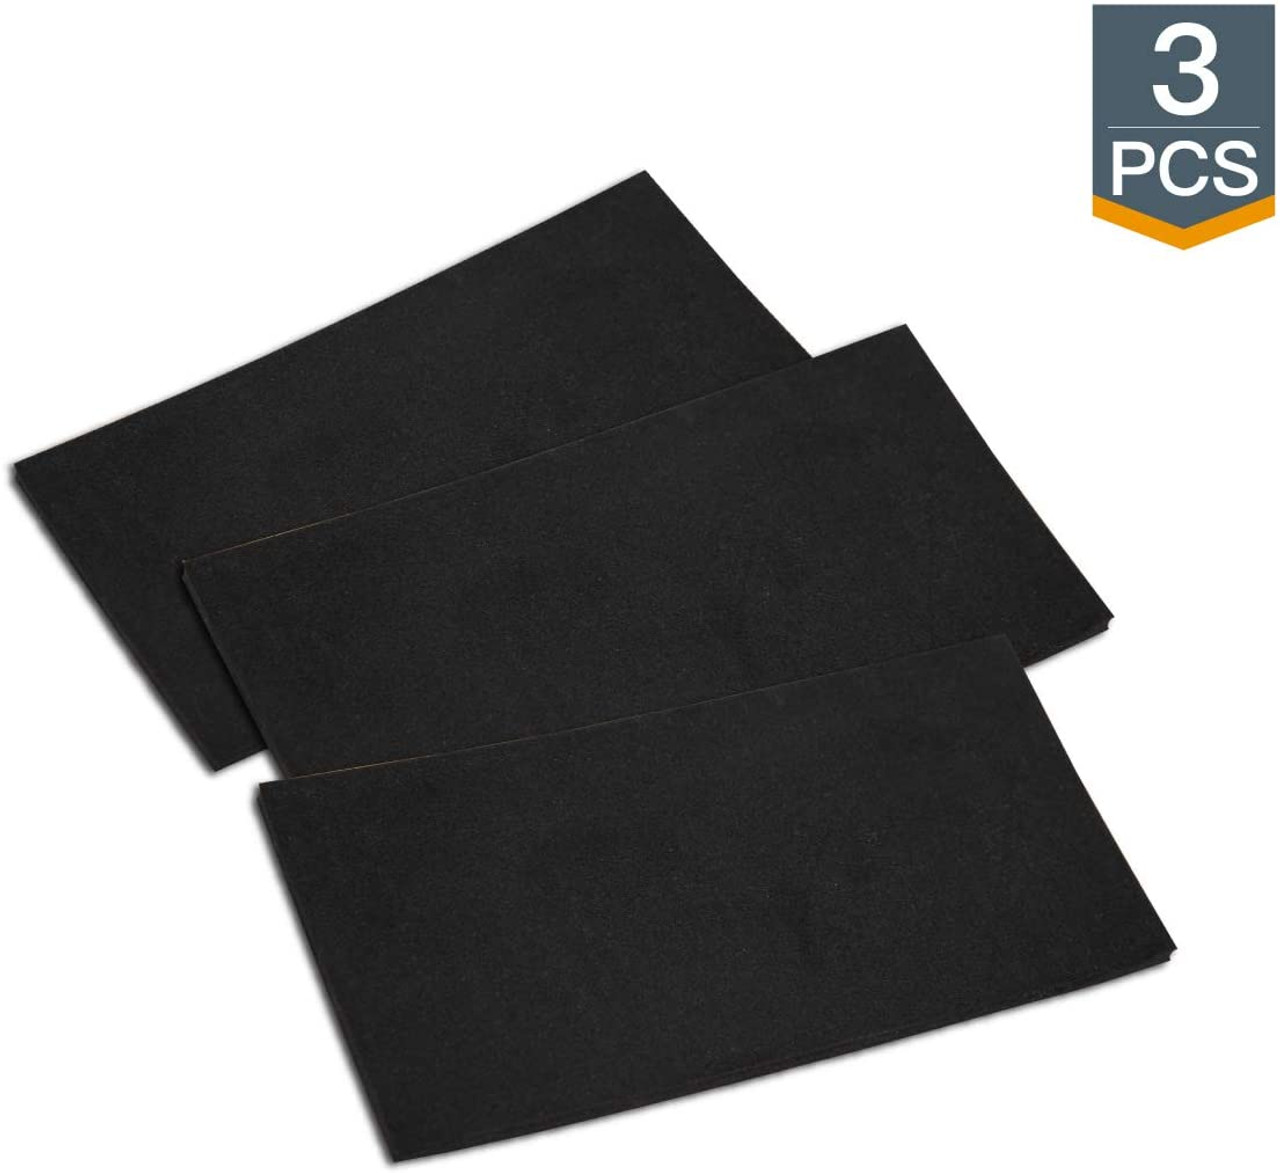 Transparent Self Stick Notes Non Tear able PVC Material Size 3 x 3